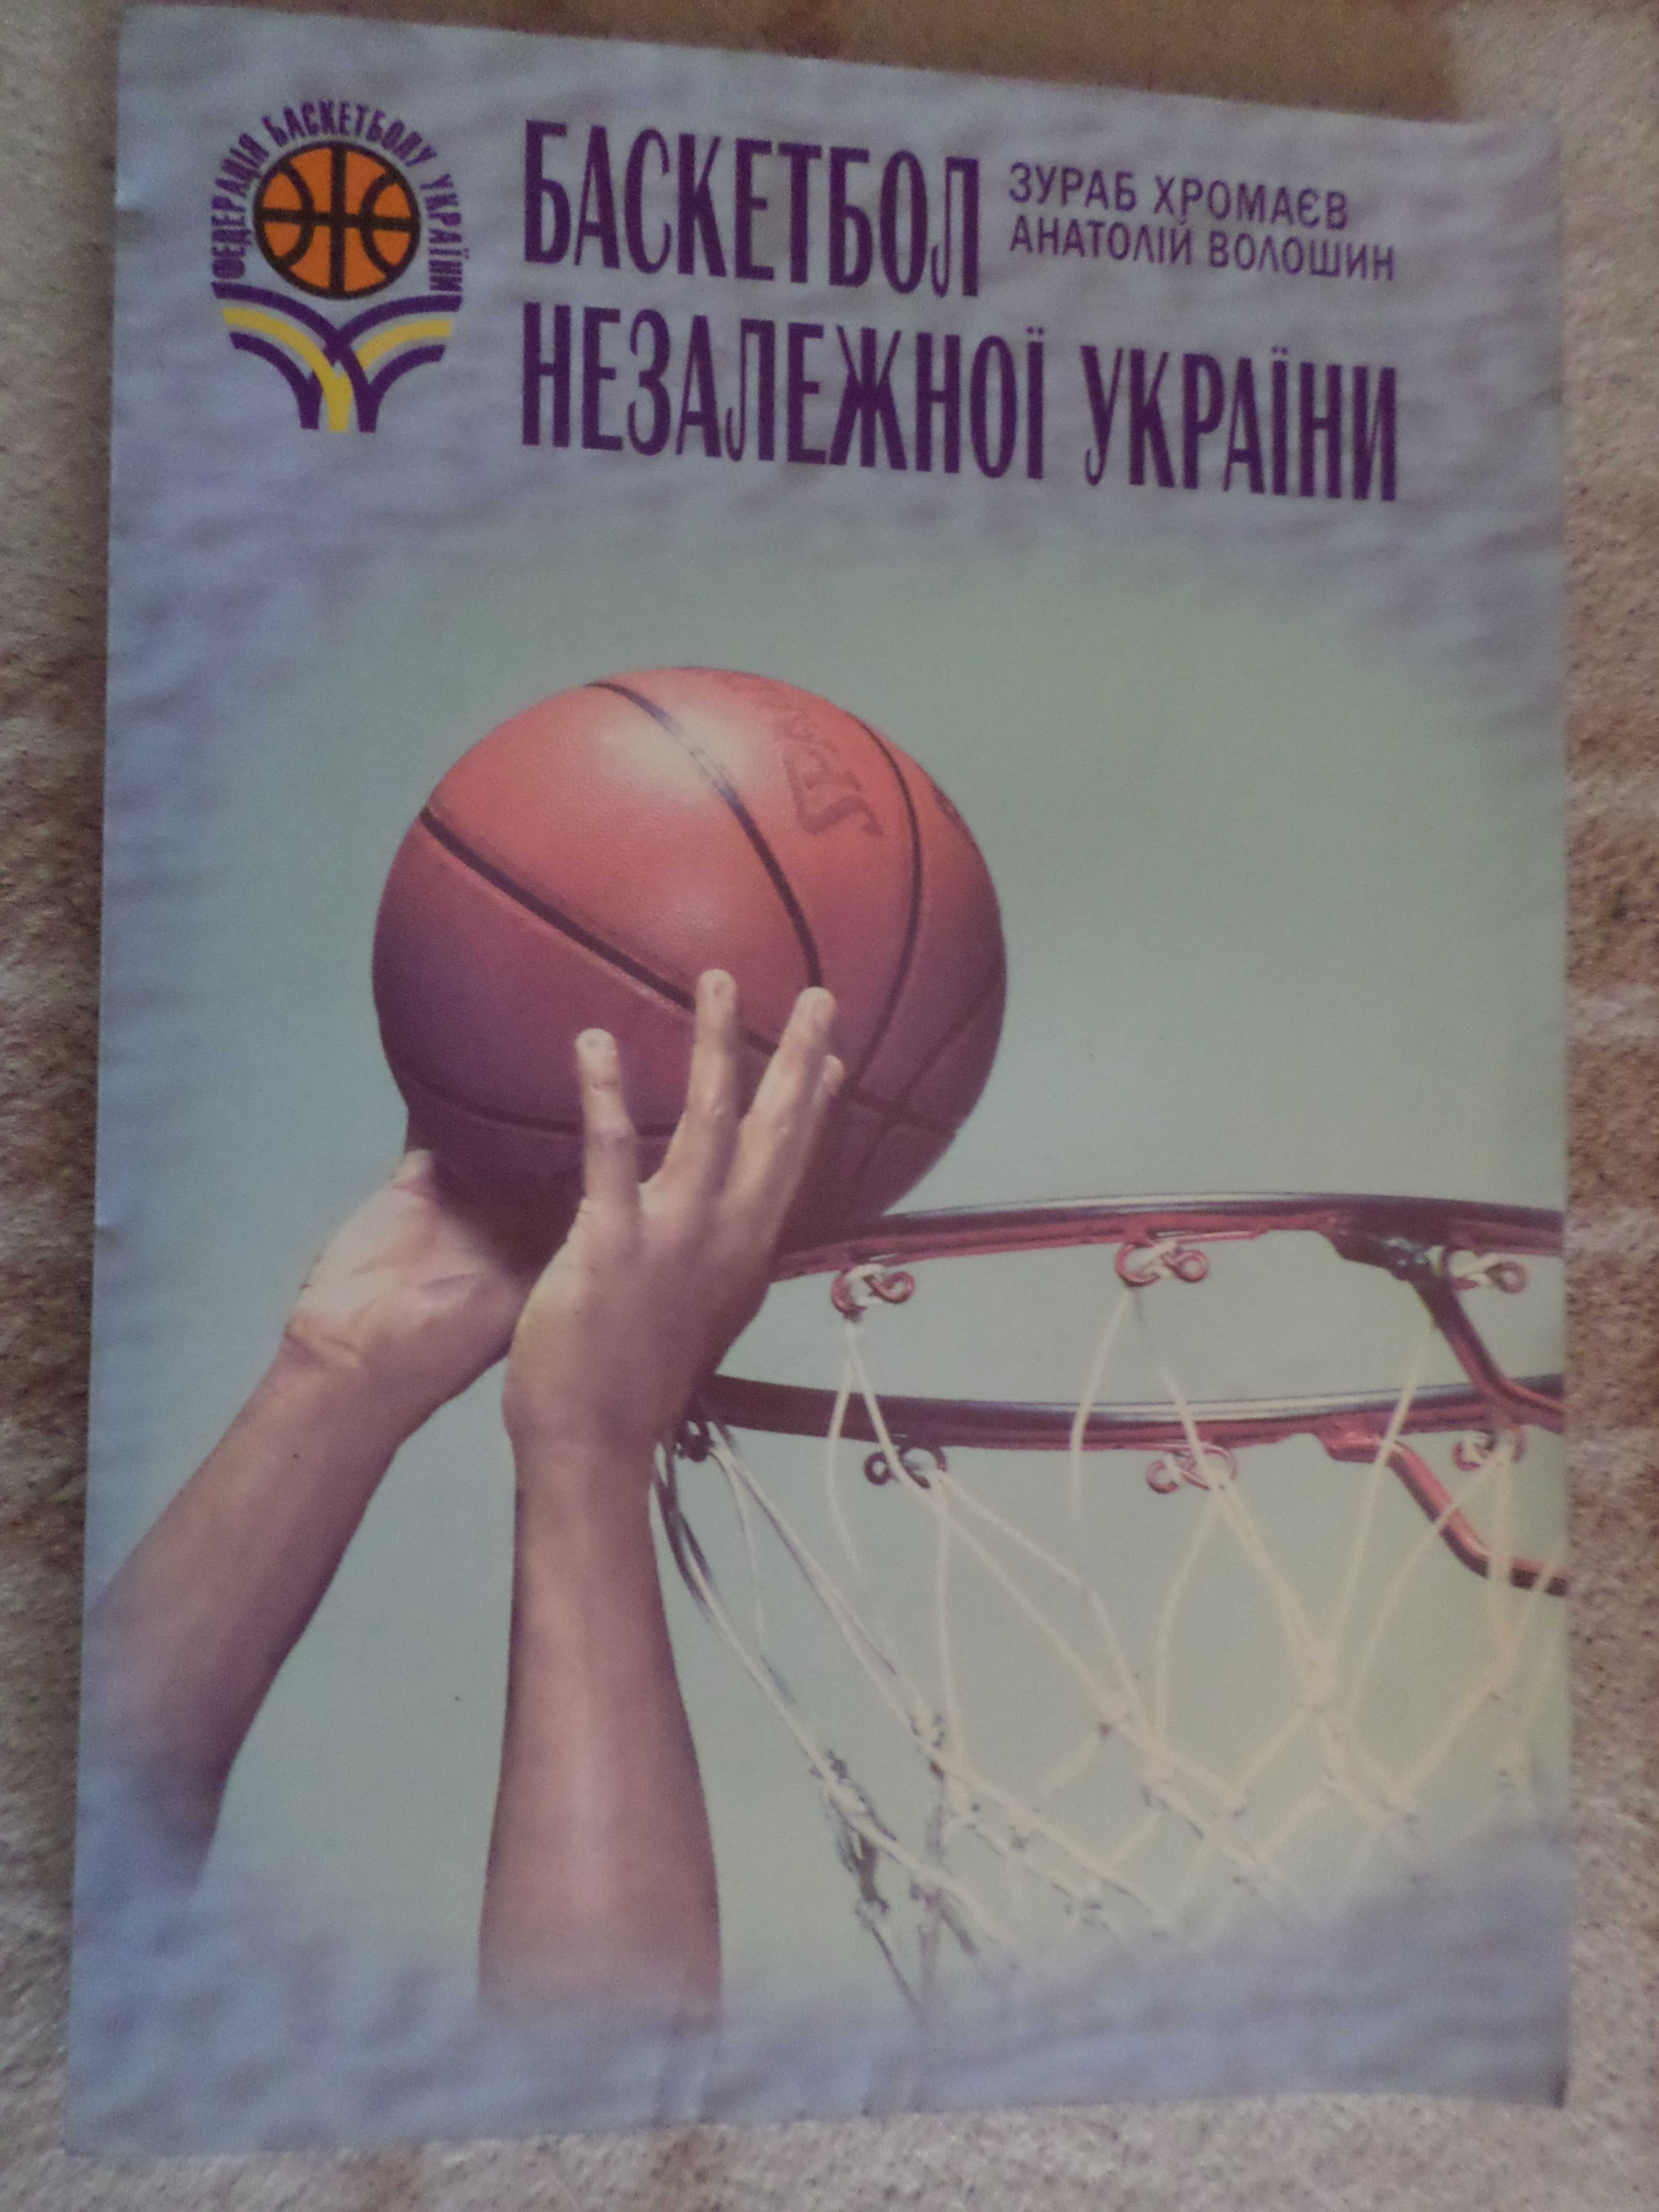 Хромаев, Волошин - Баскетбол незалежної України